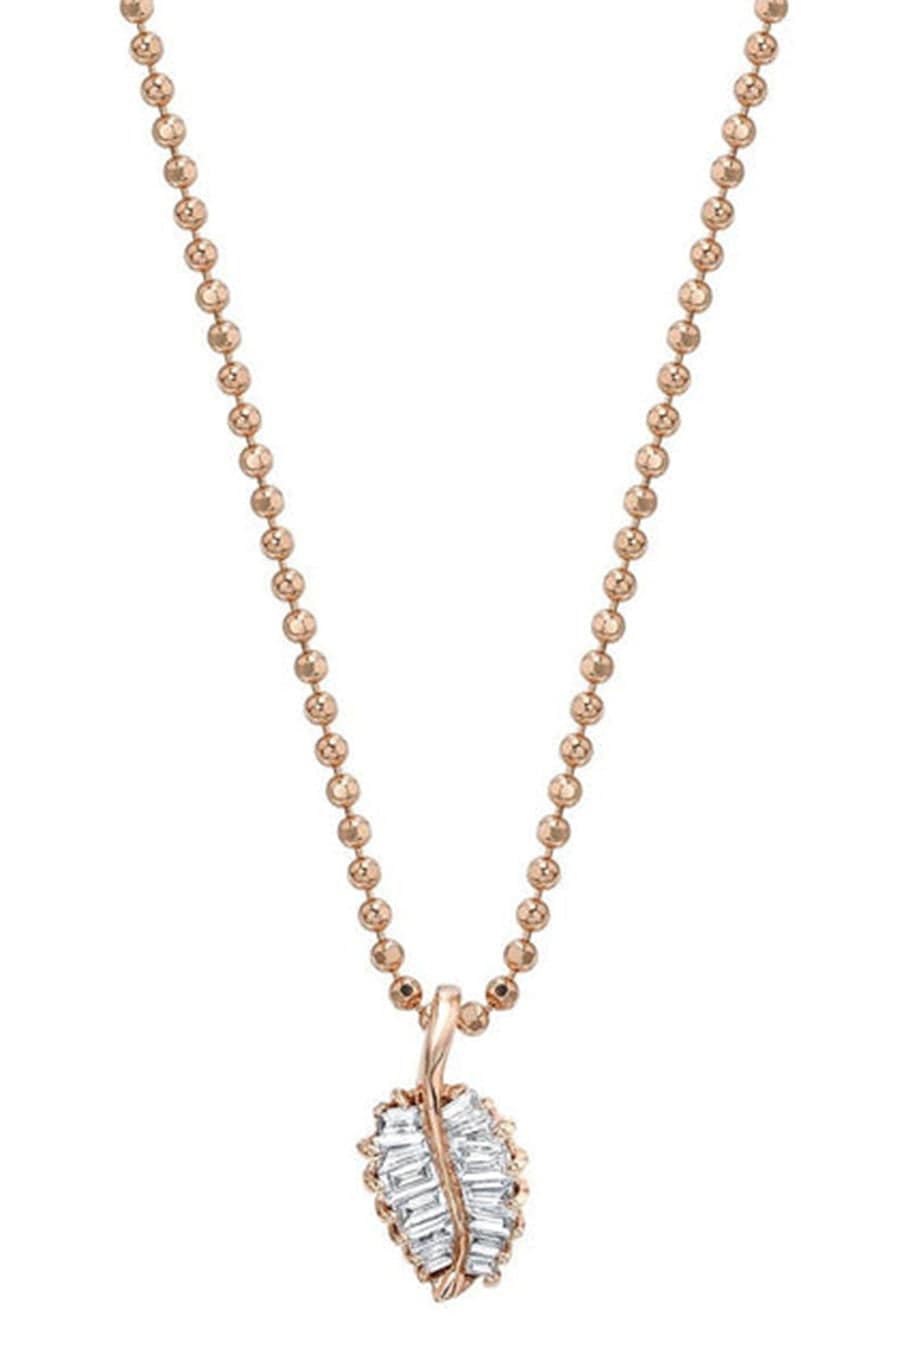 Anita Ko Jewelry \ Necklaces